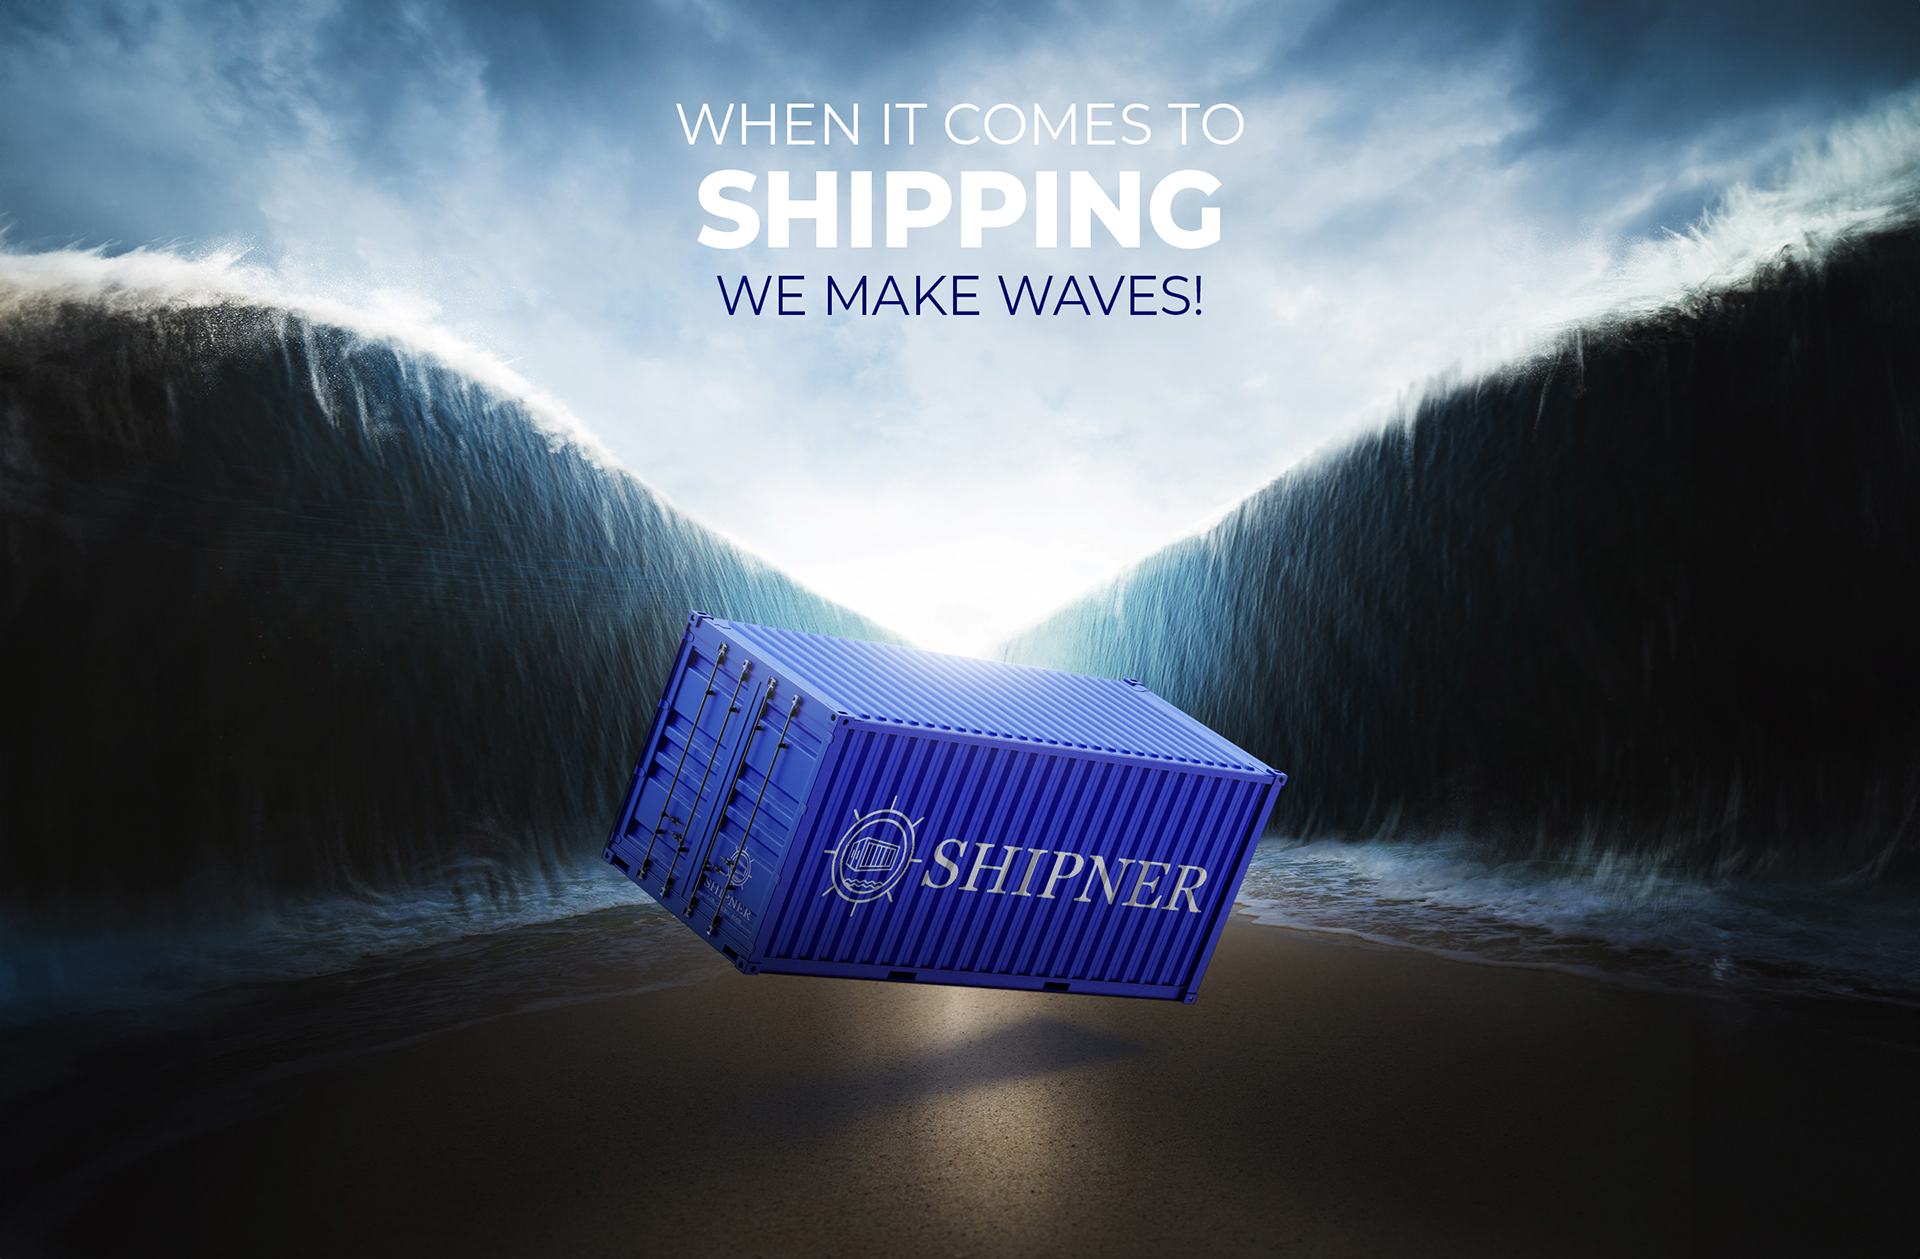 Shipner Makes Waves